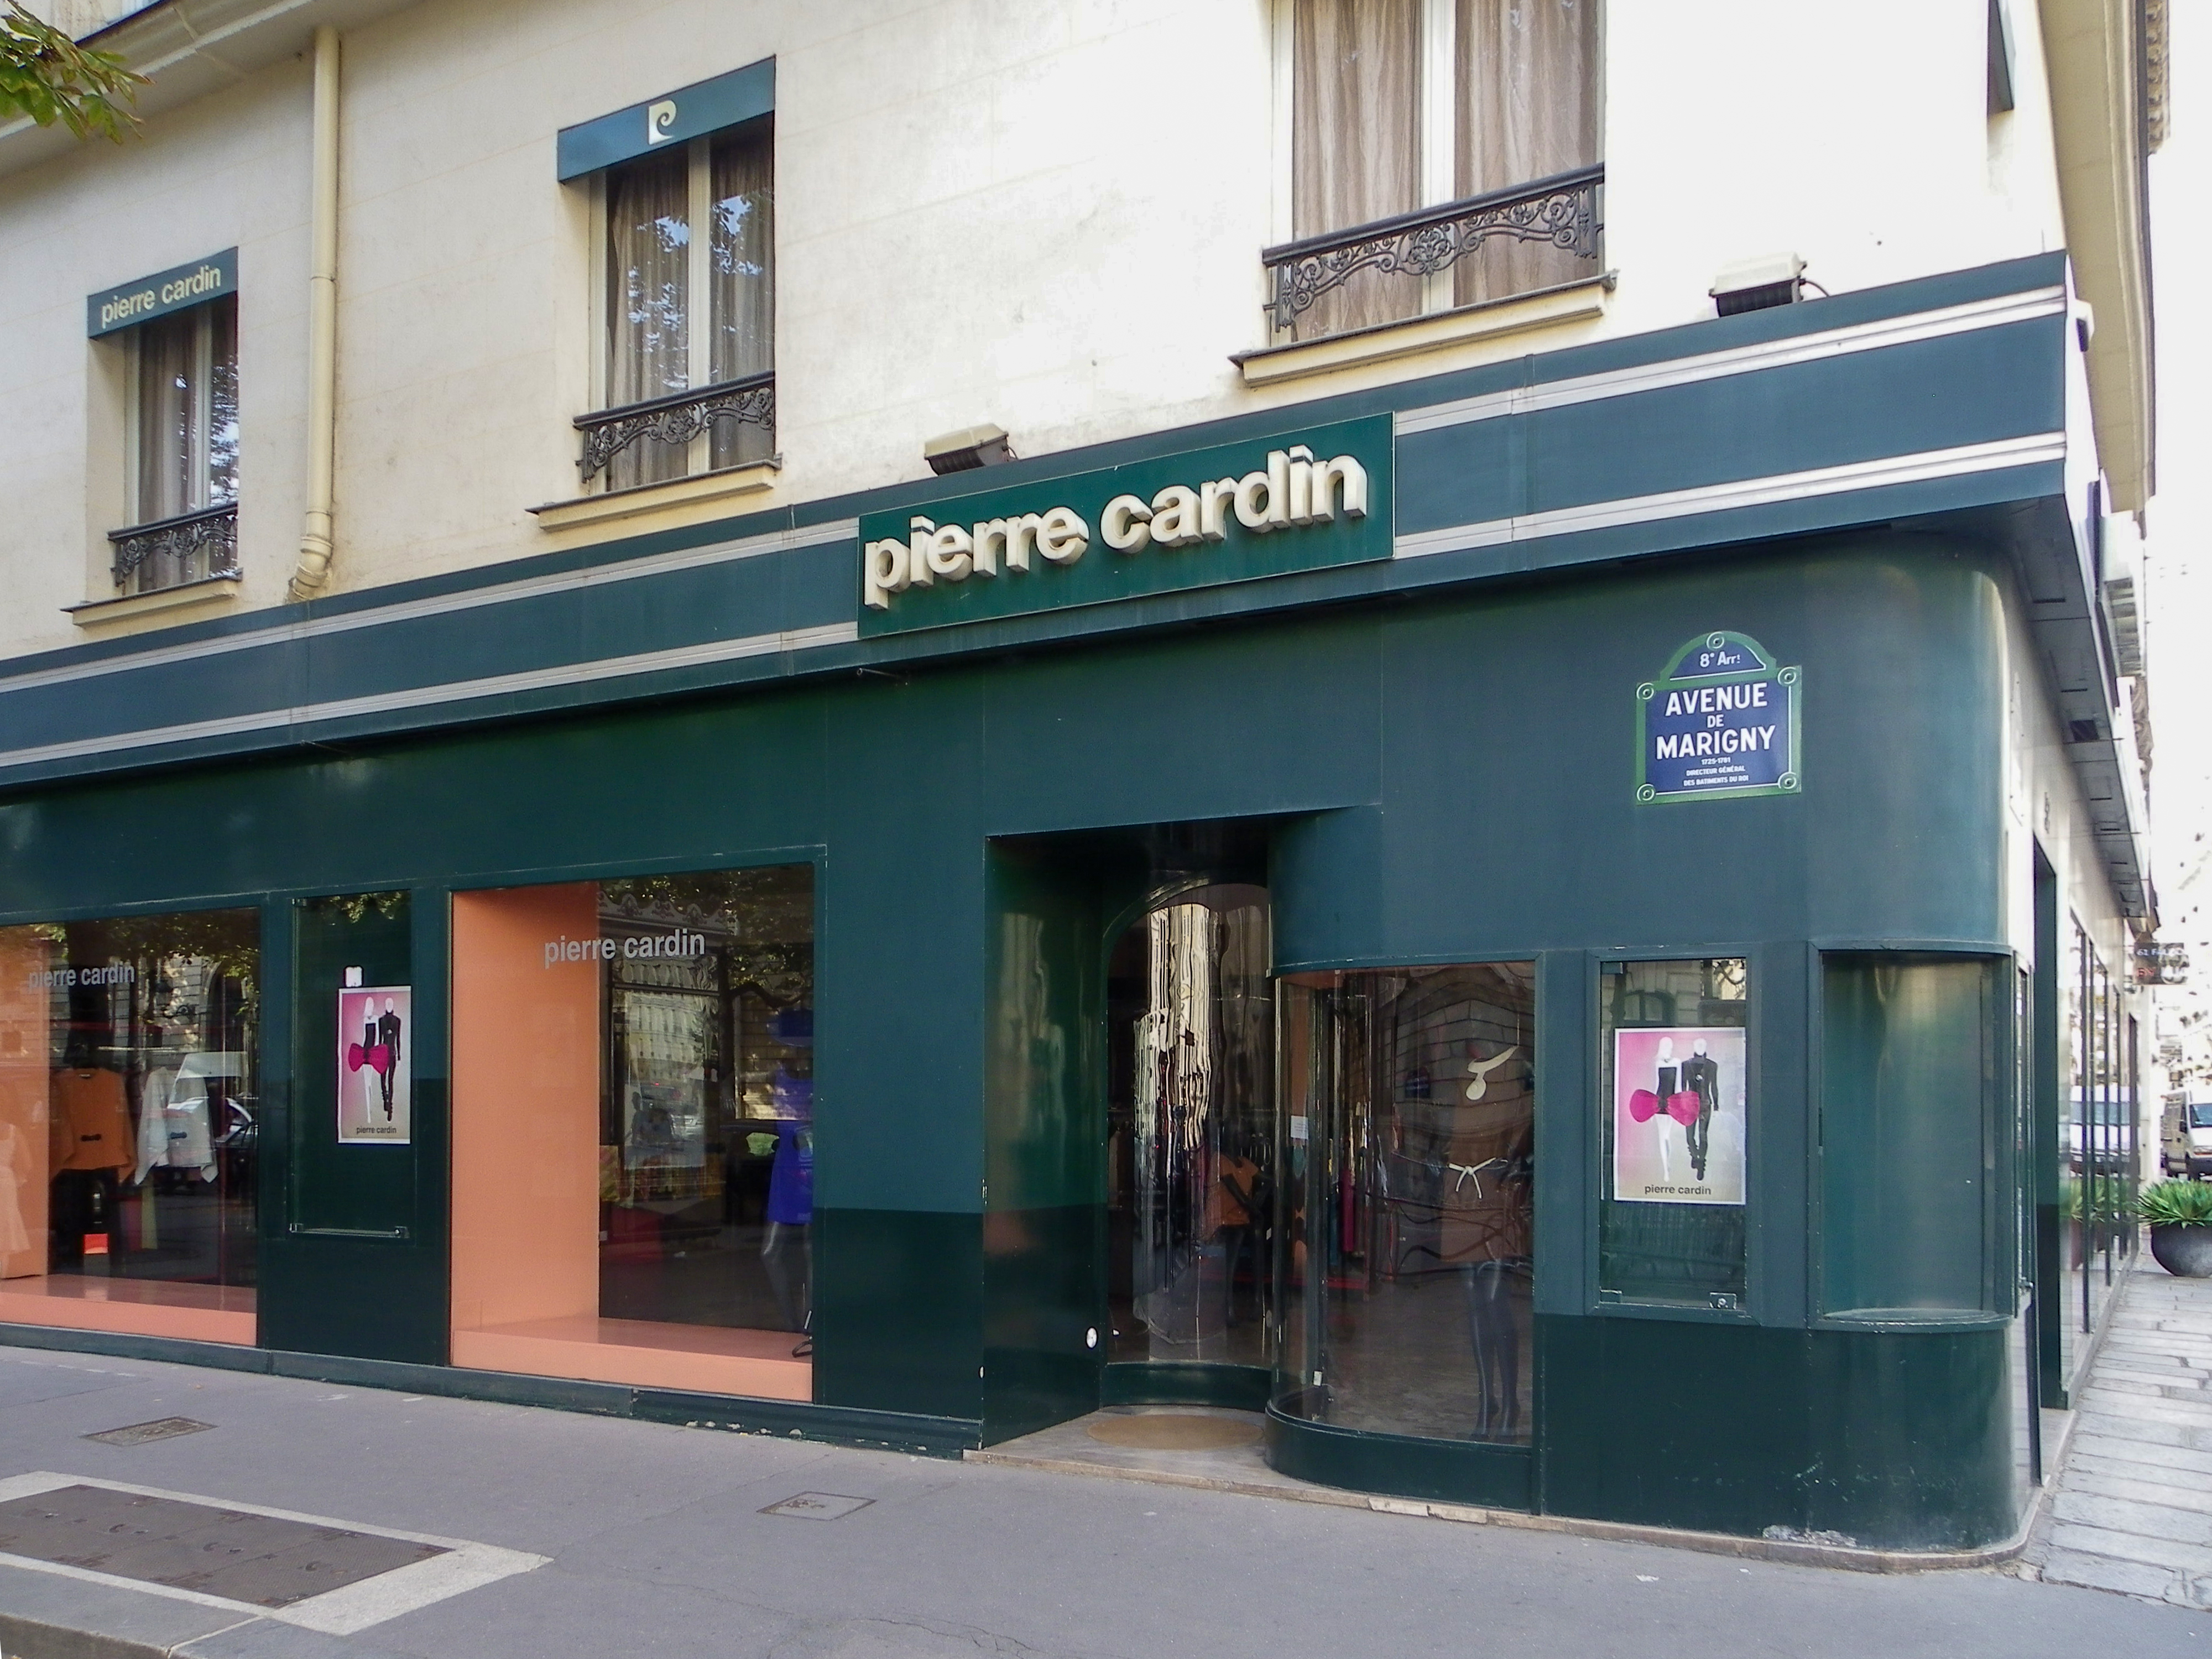 Wikipedia, Avenue de Marigny (Paris), Clothing shops in Paris, Green shops in Paris, Pierre Cardin, 